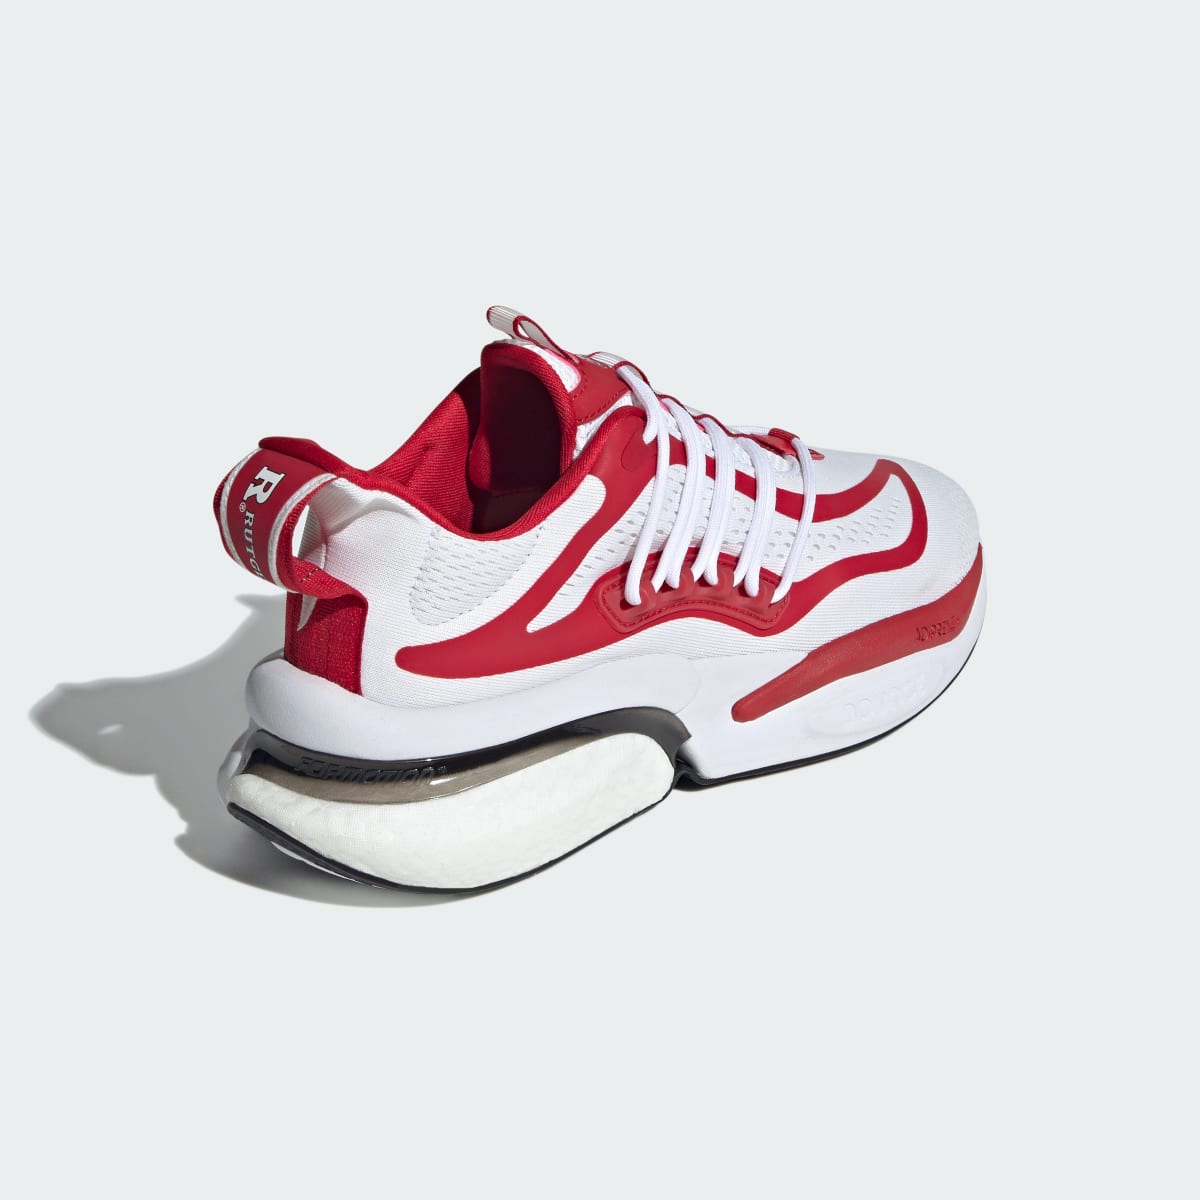 Adidas Rutgers Alphaboost V1 Shoes. 6